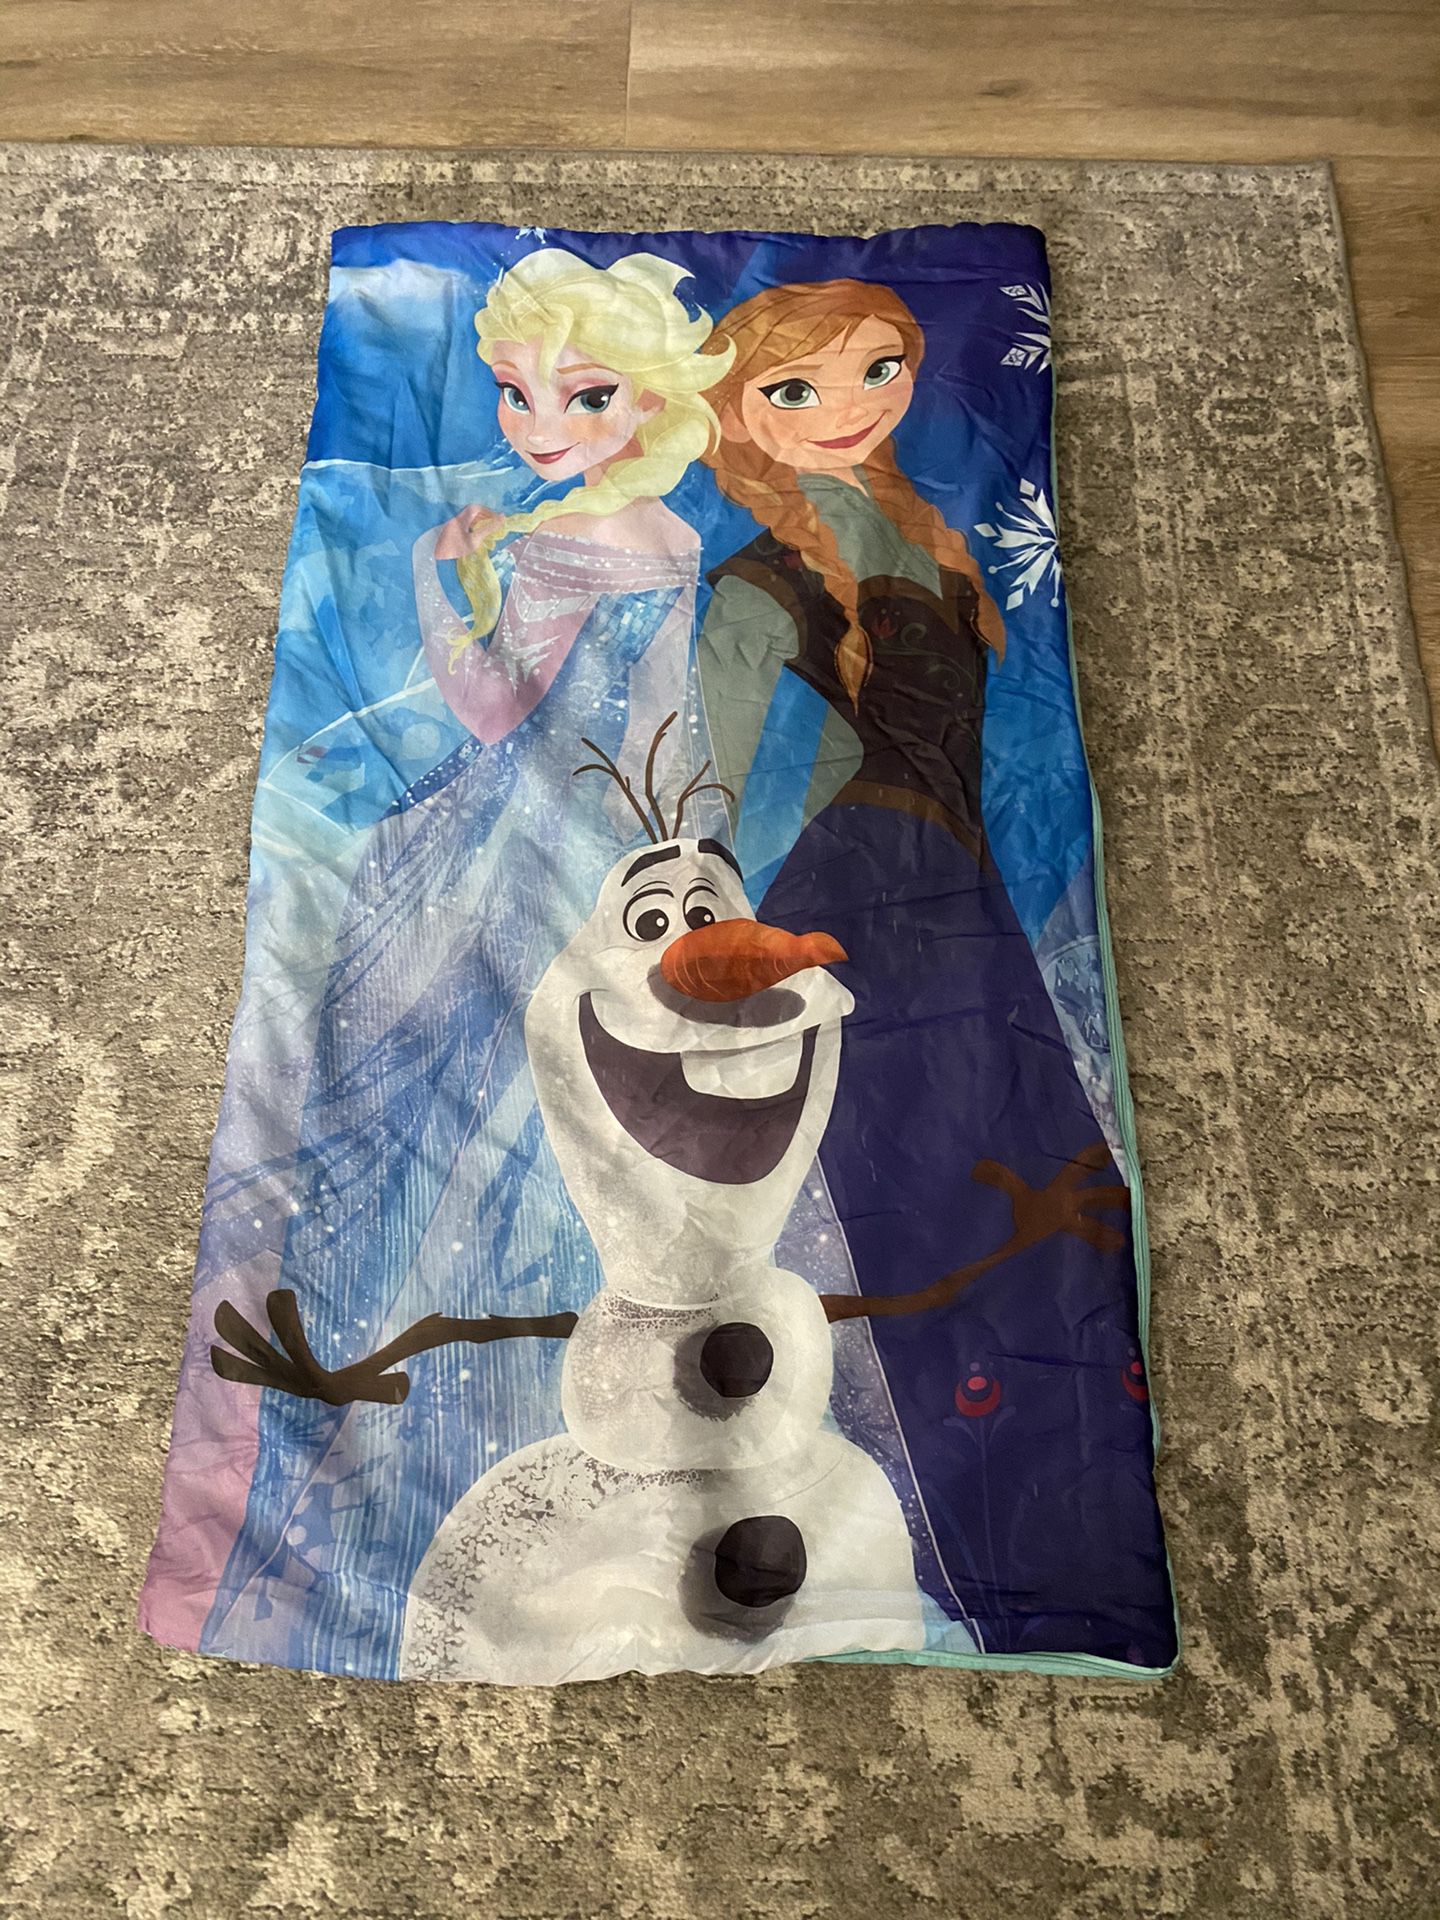 Frozen Elsa and Anna Sleeping Bag